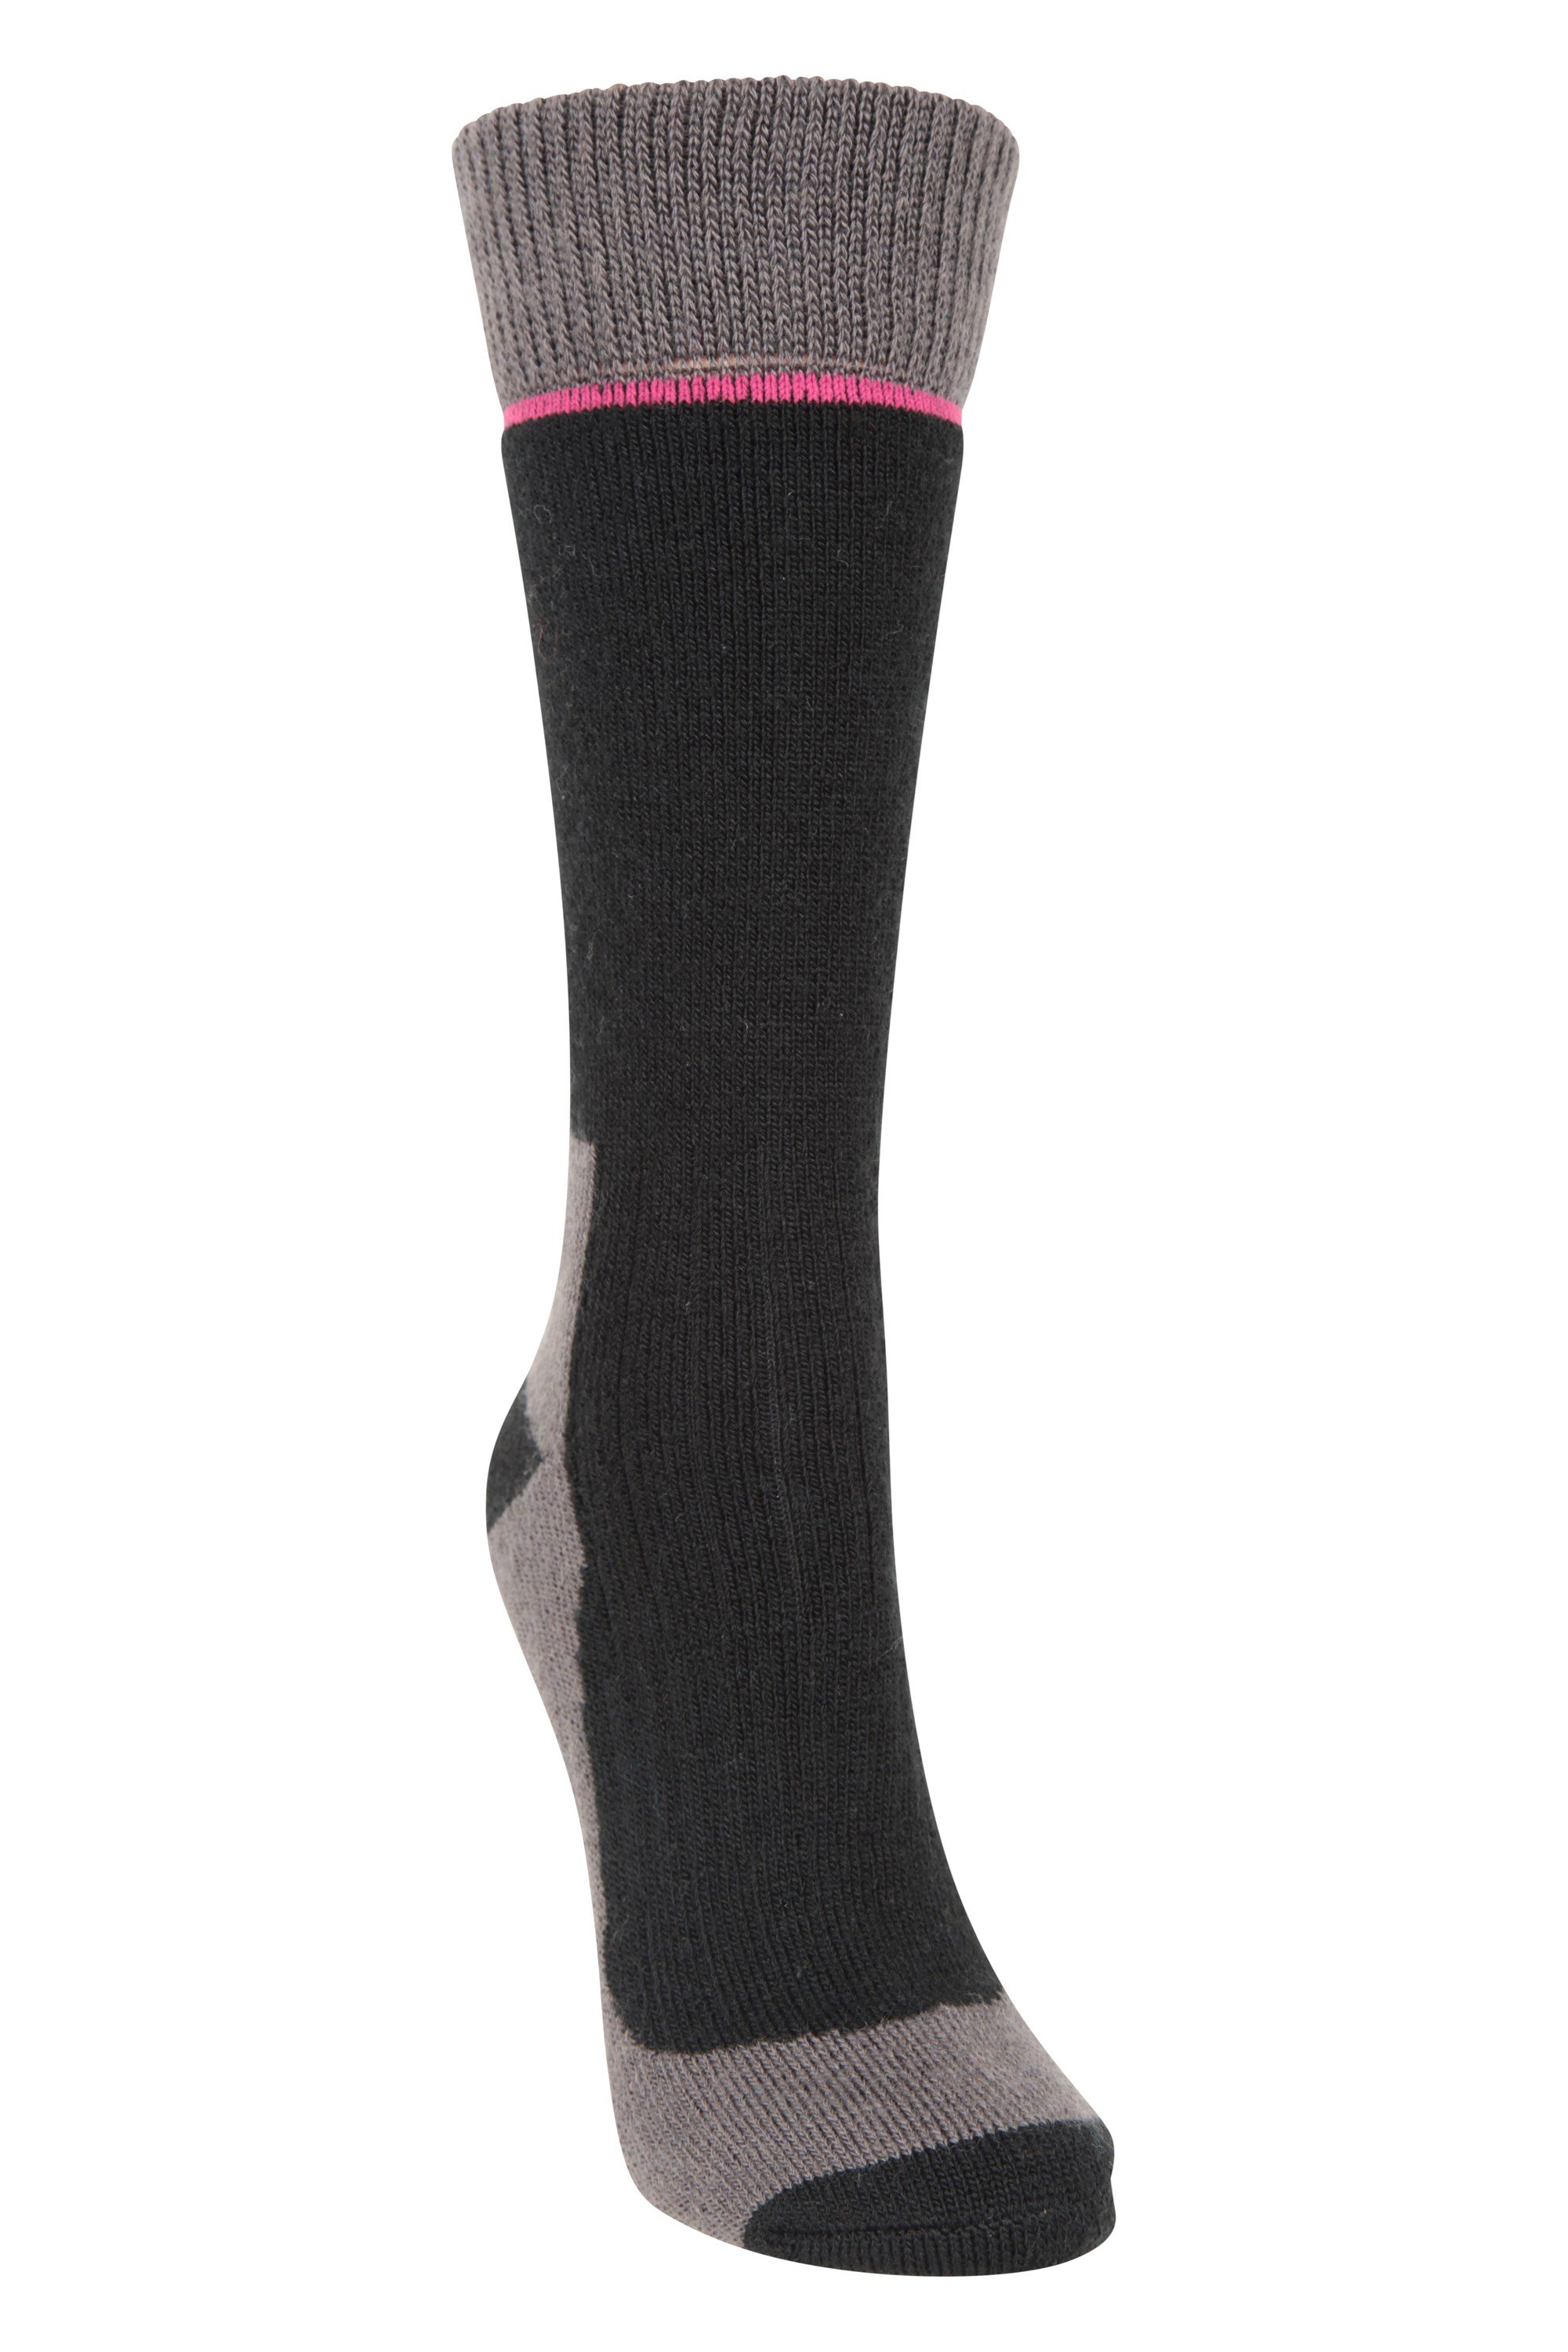 Explorer Womens Merino Thermal Mid-Calf Socks - Black